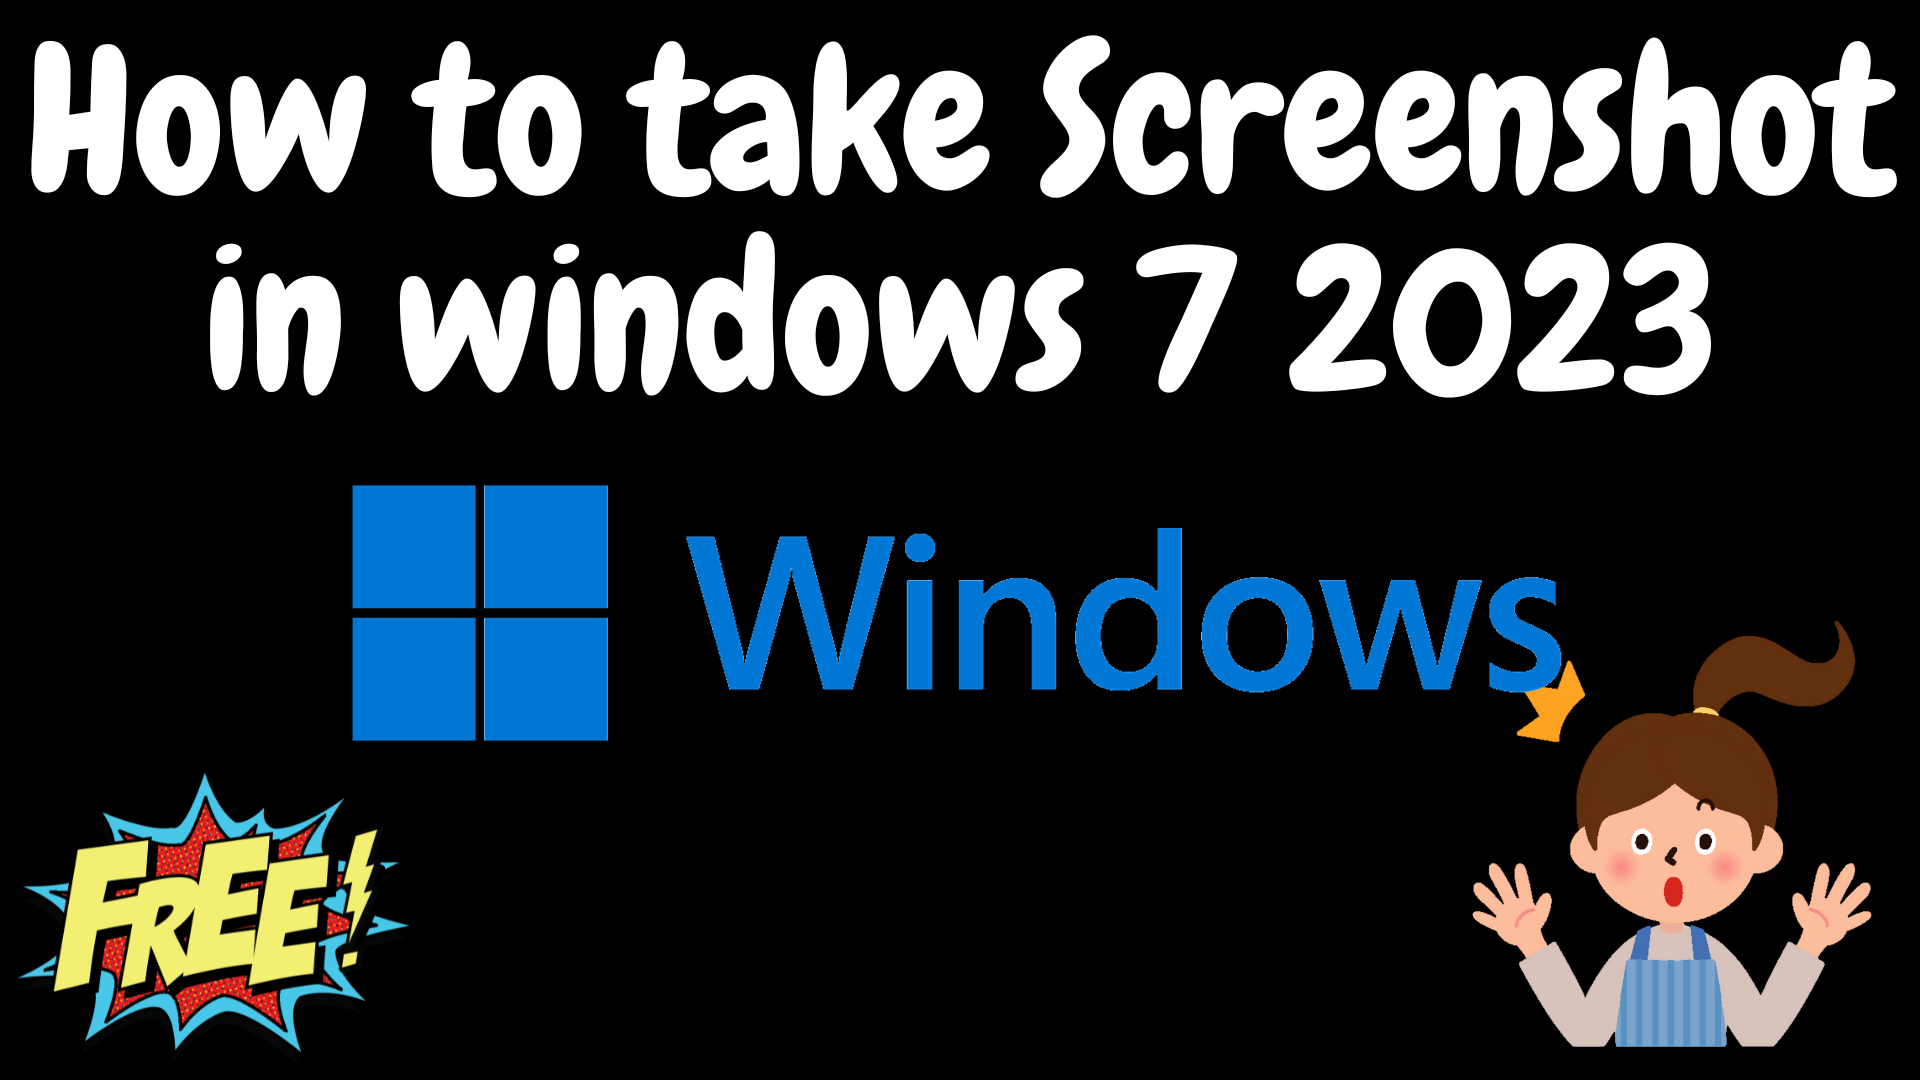 How to take Screenshot in windows 7 2023